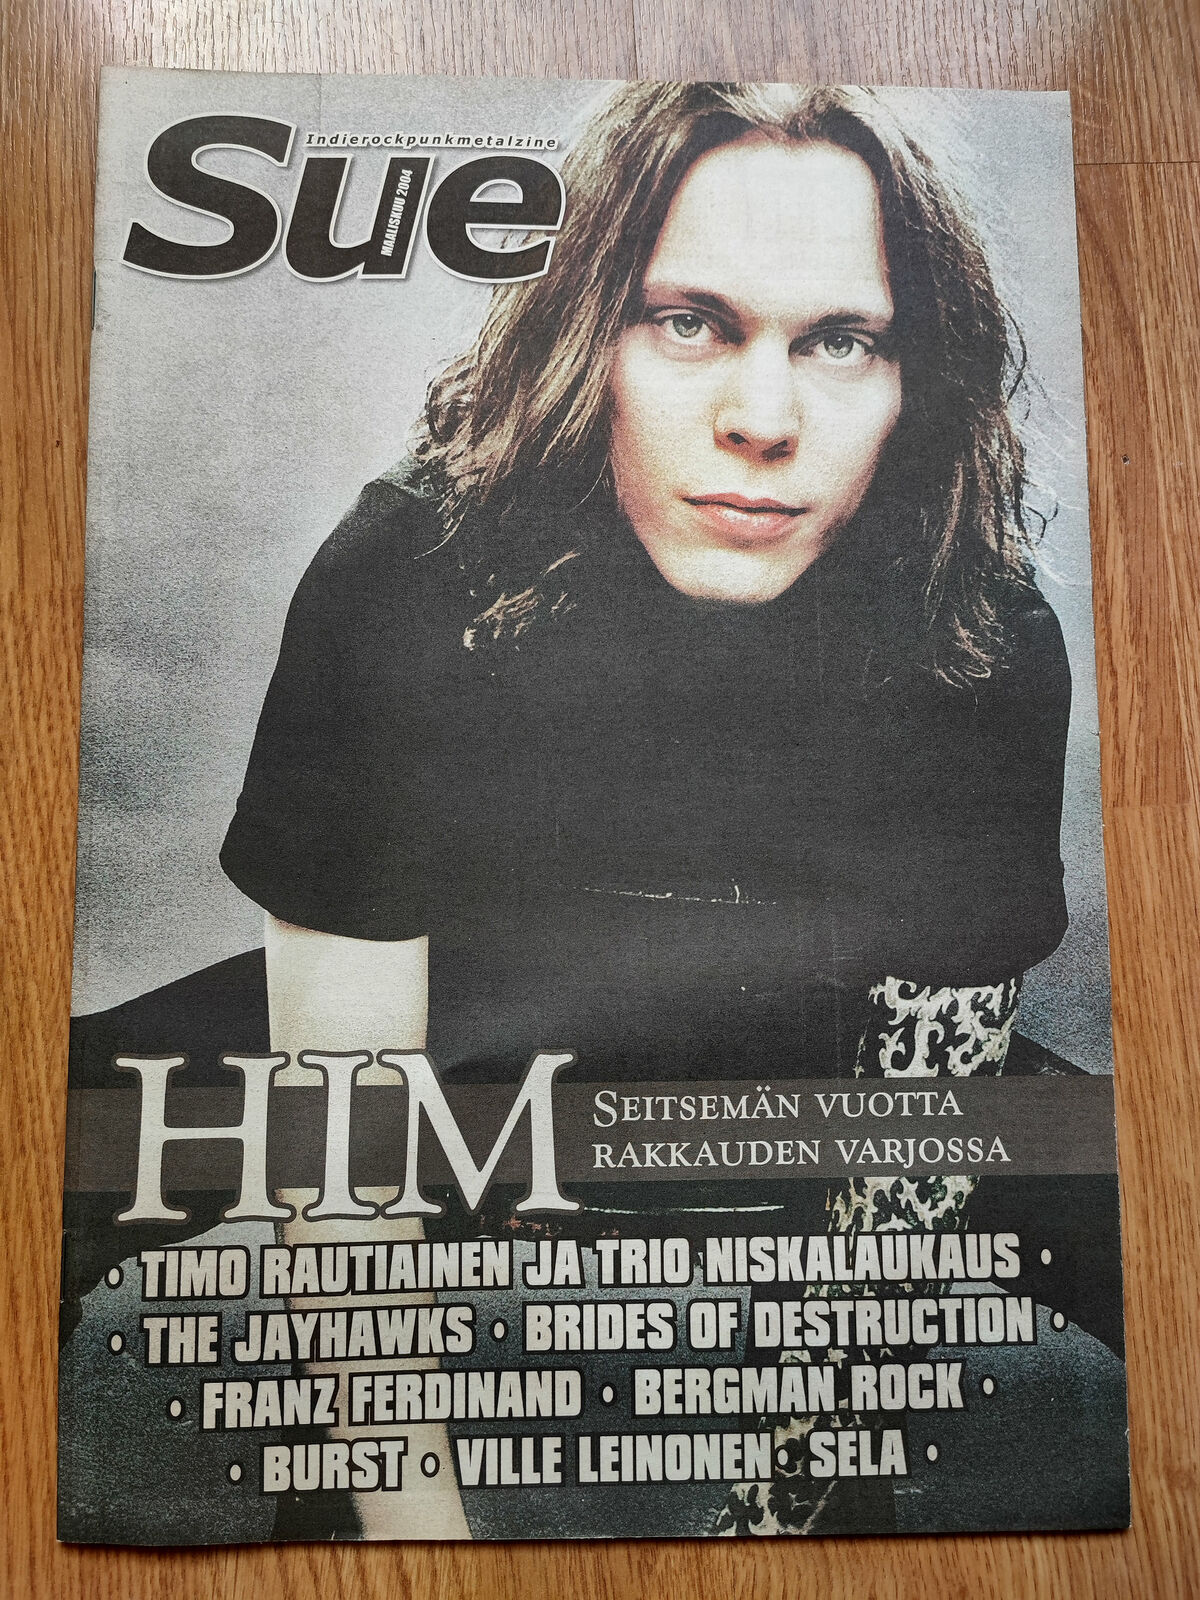 Finnish Sue Magazine 3/2004 : Ville Valo Cover + Him, Franz Ferdinand, Deicide..